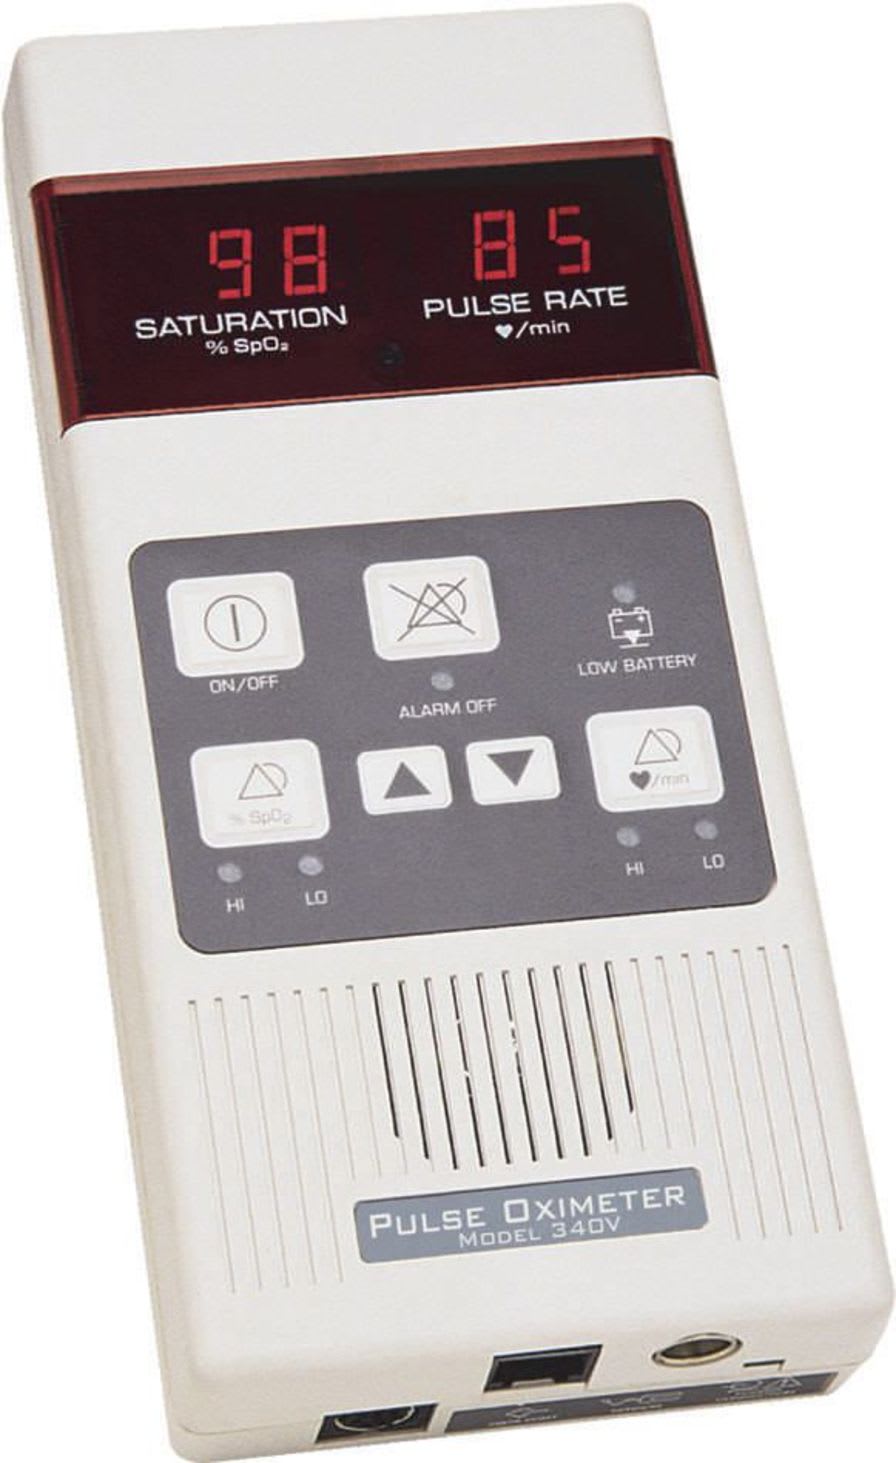 Pulse oximeter with separate sensor / handheld / veterinary 0-100 % SpO2 | MODEL 340VT Mediaid Inc.